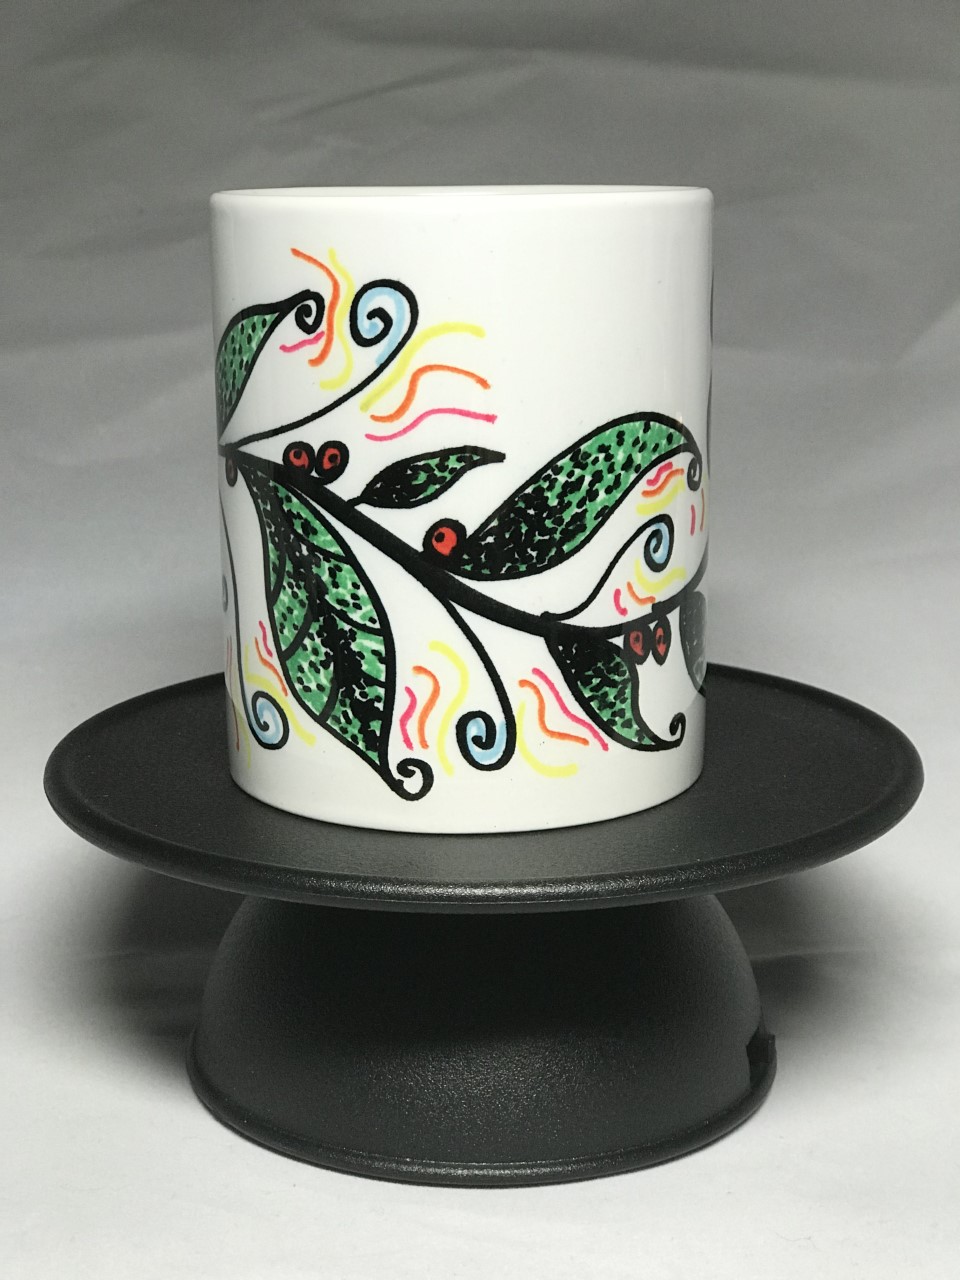 Spring mug made with sublimation printing